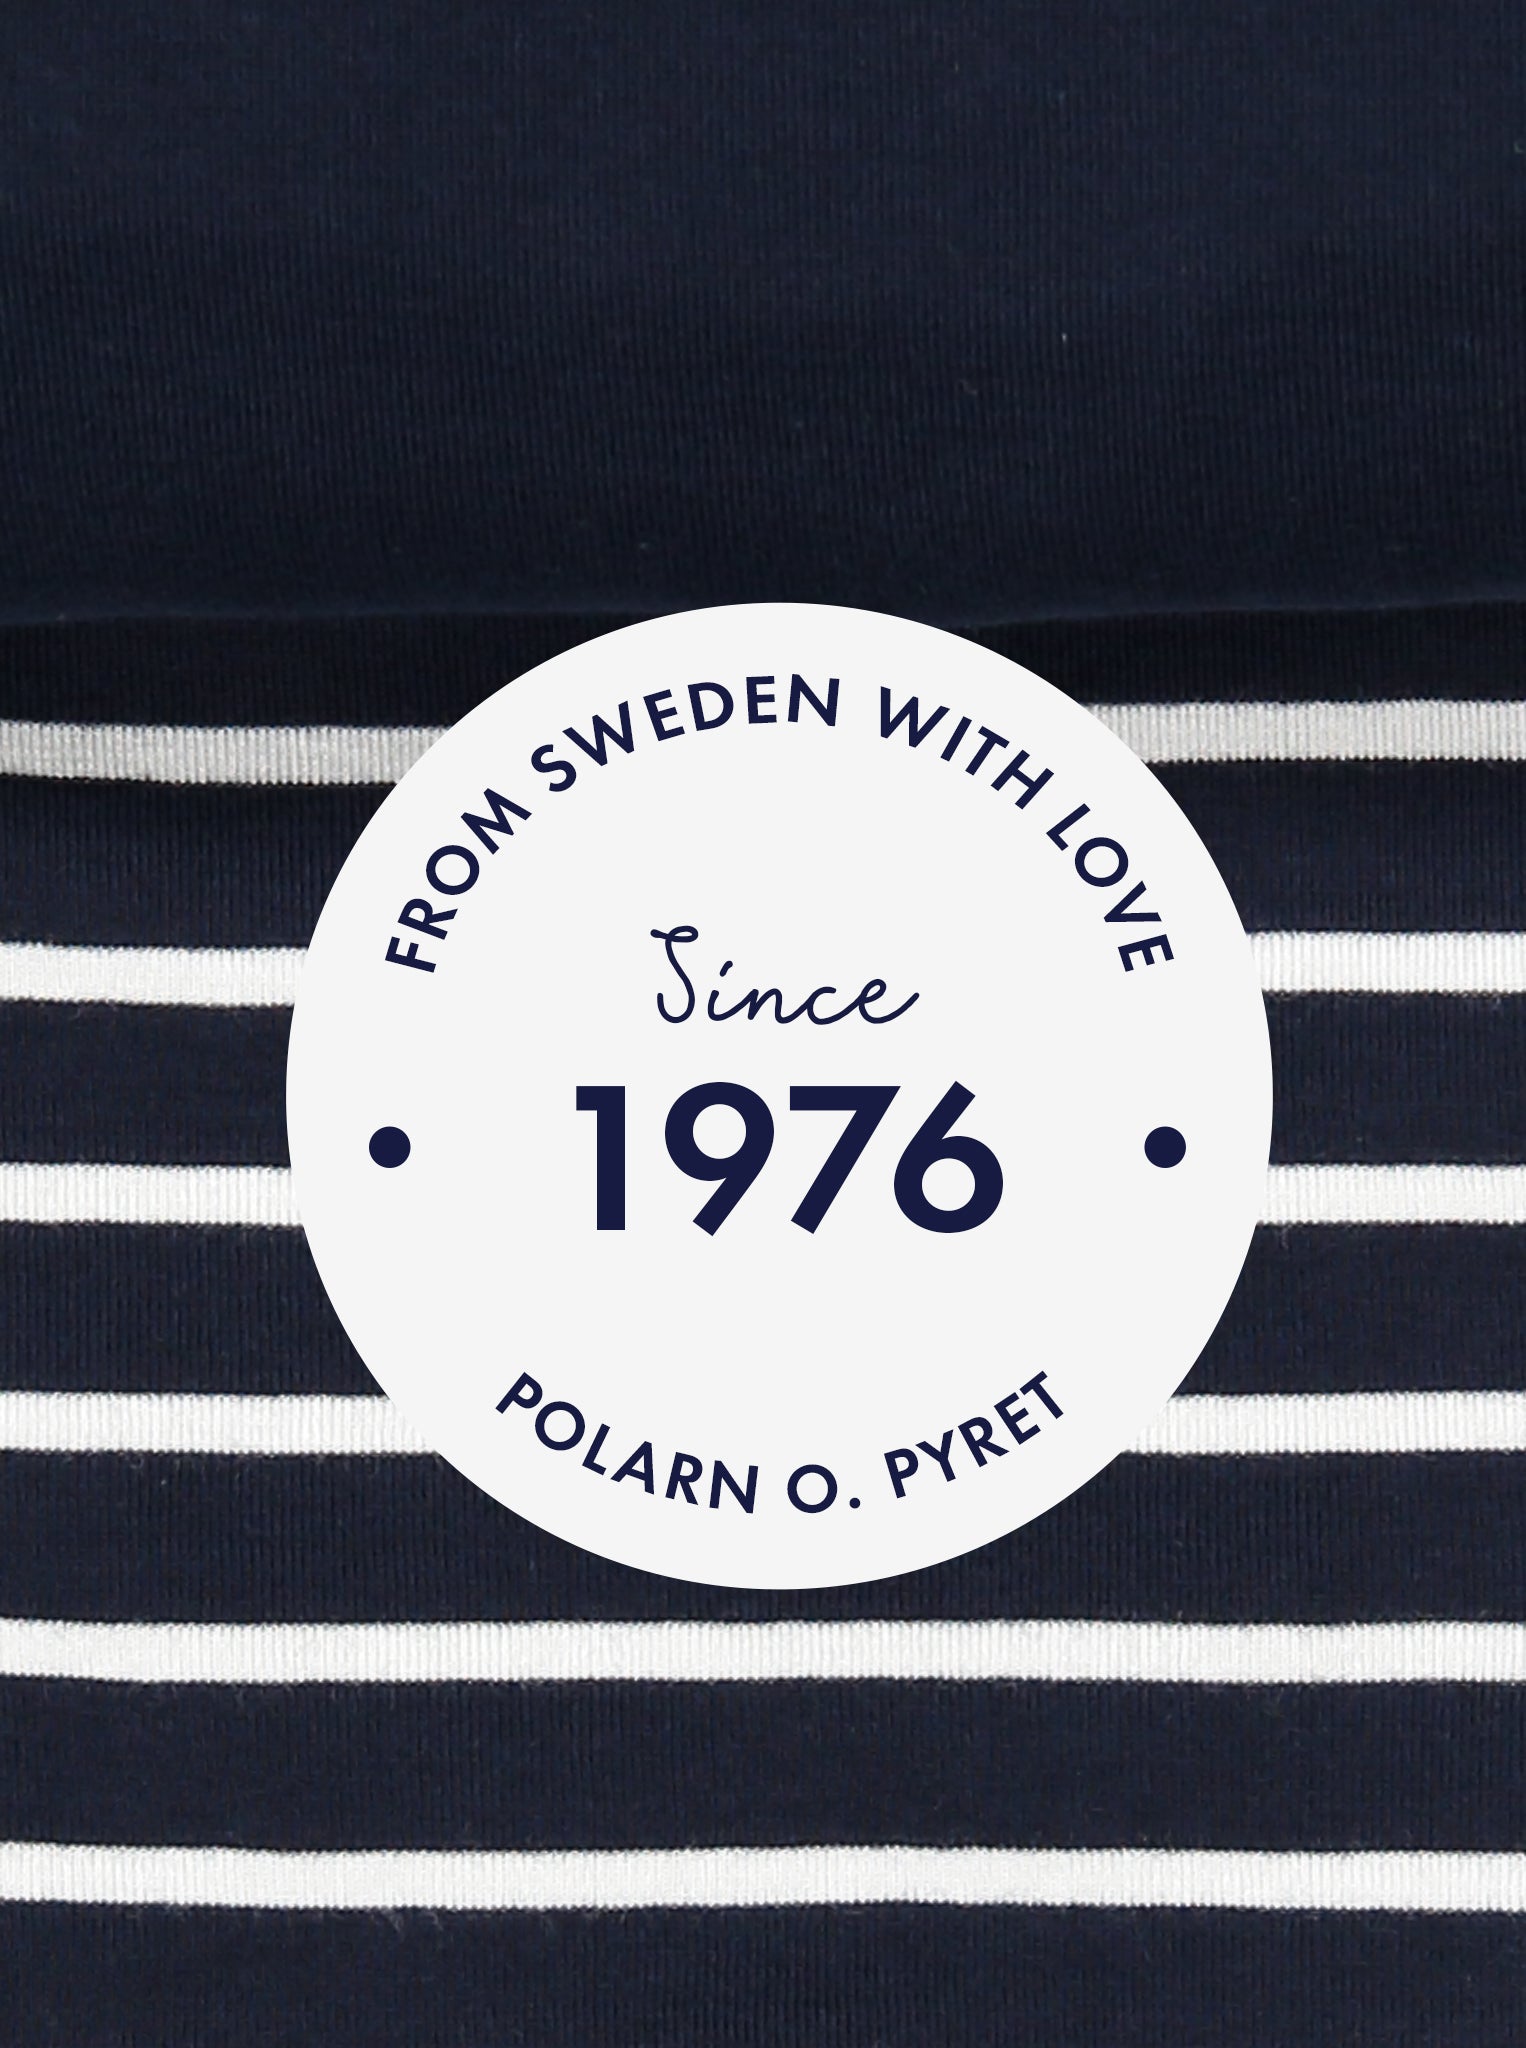 polarn o. pyret 1976 logo in navy and white stripes